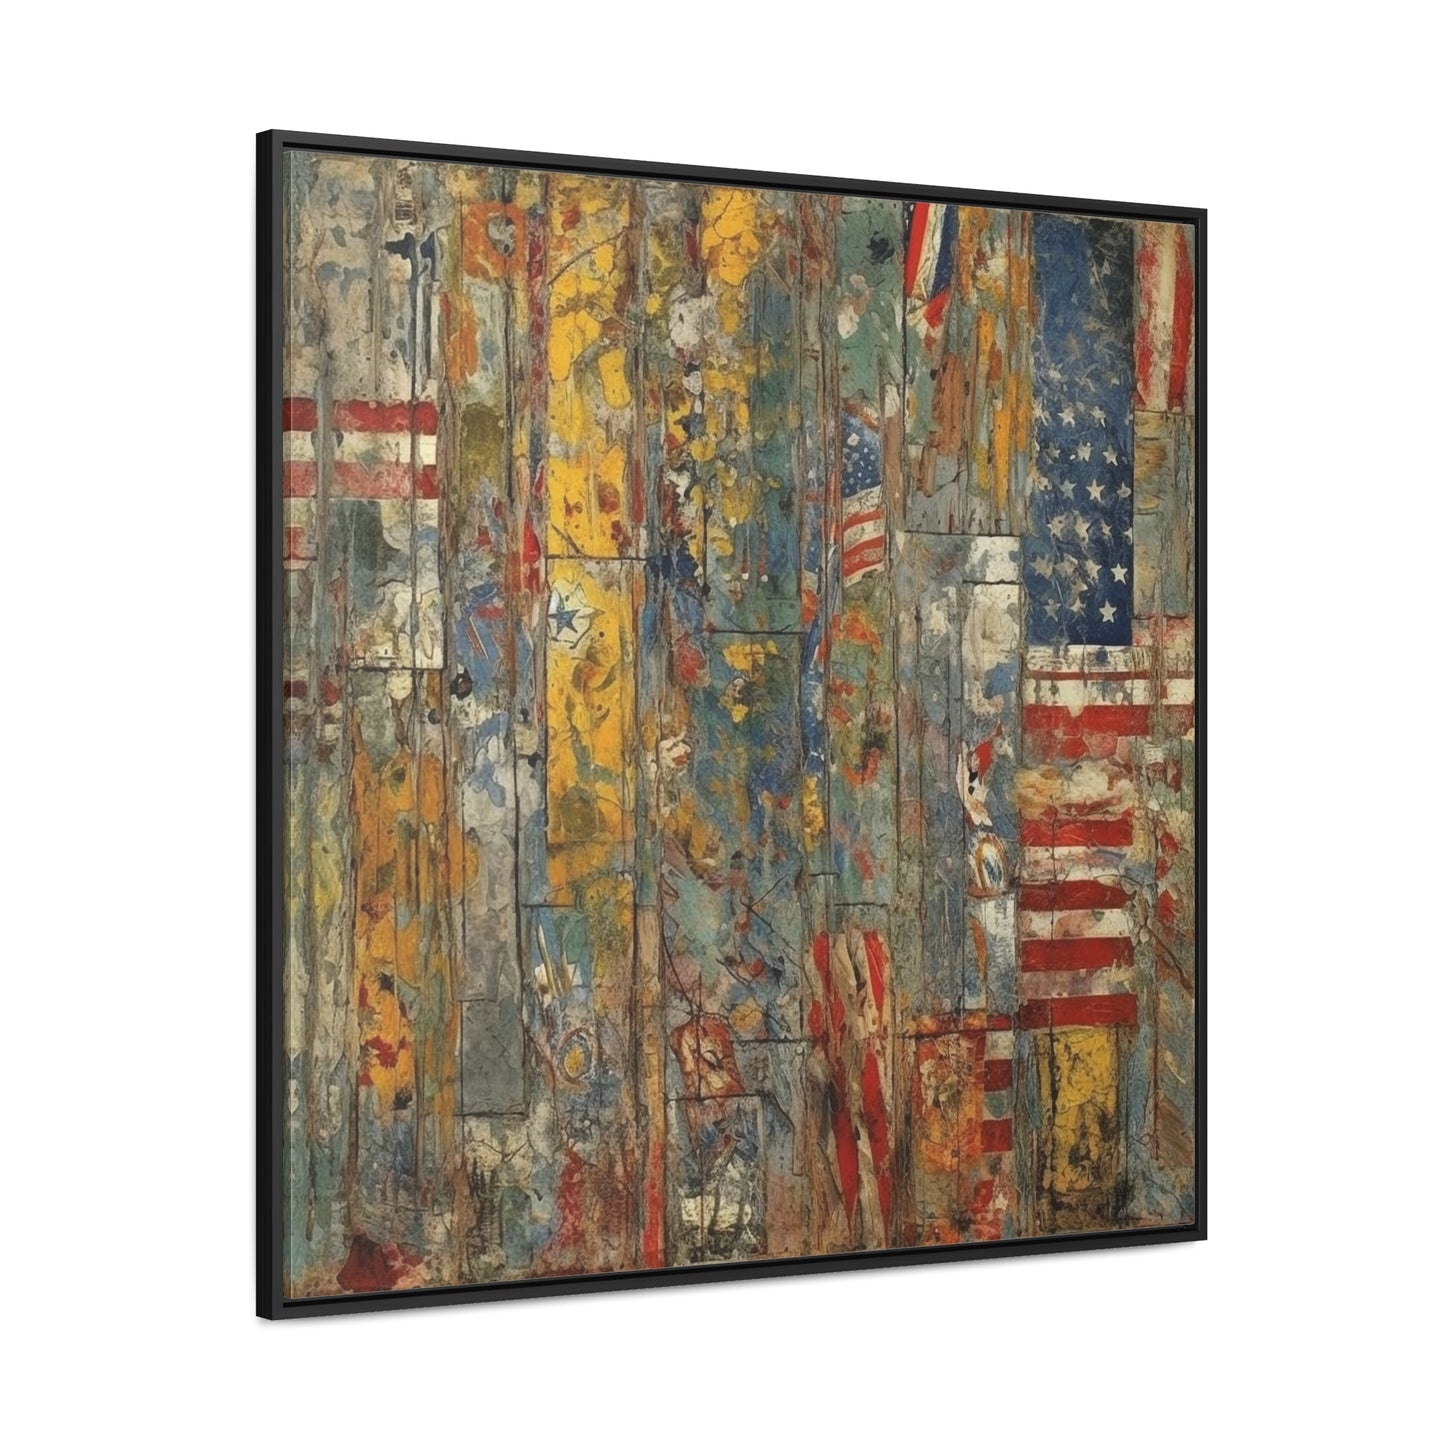 USA 9, Gallery Canvas Wraps, Square Frame